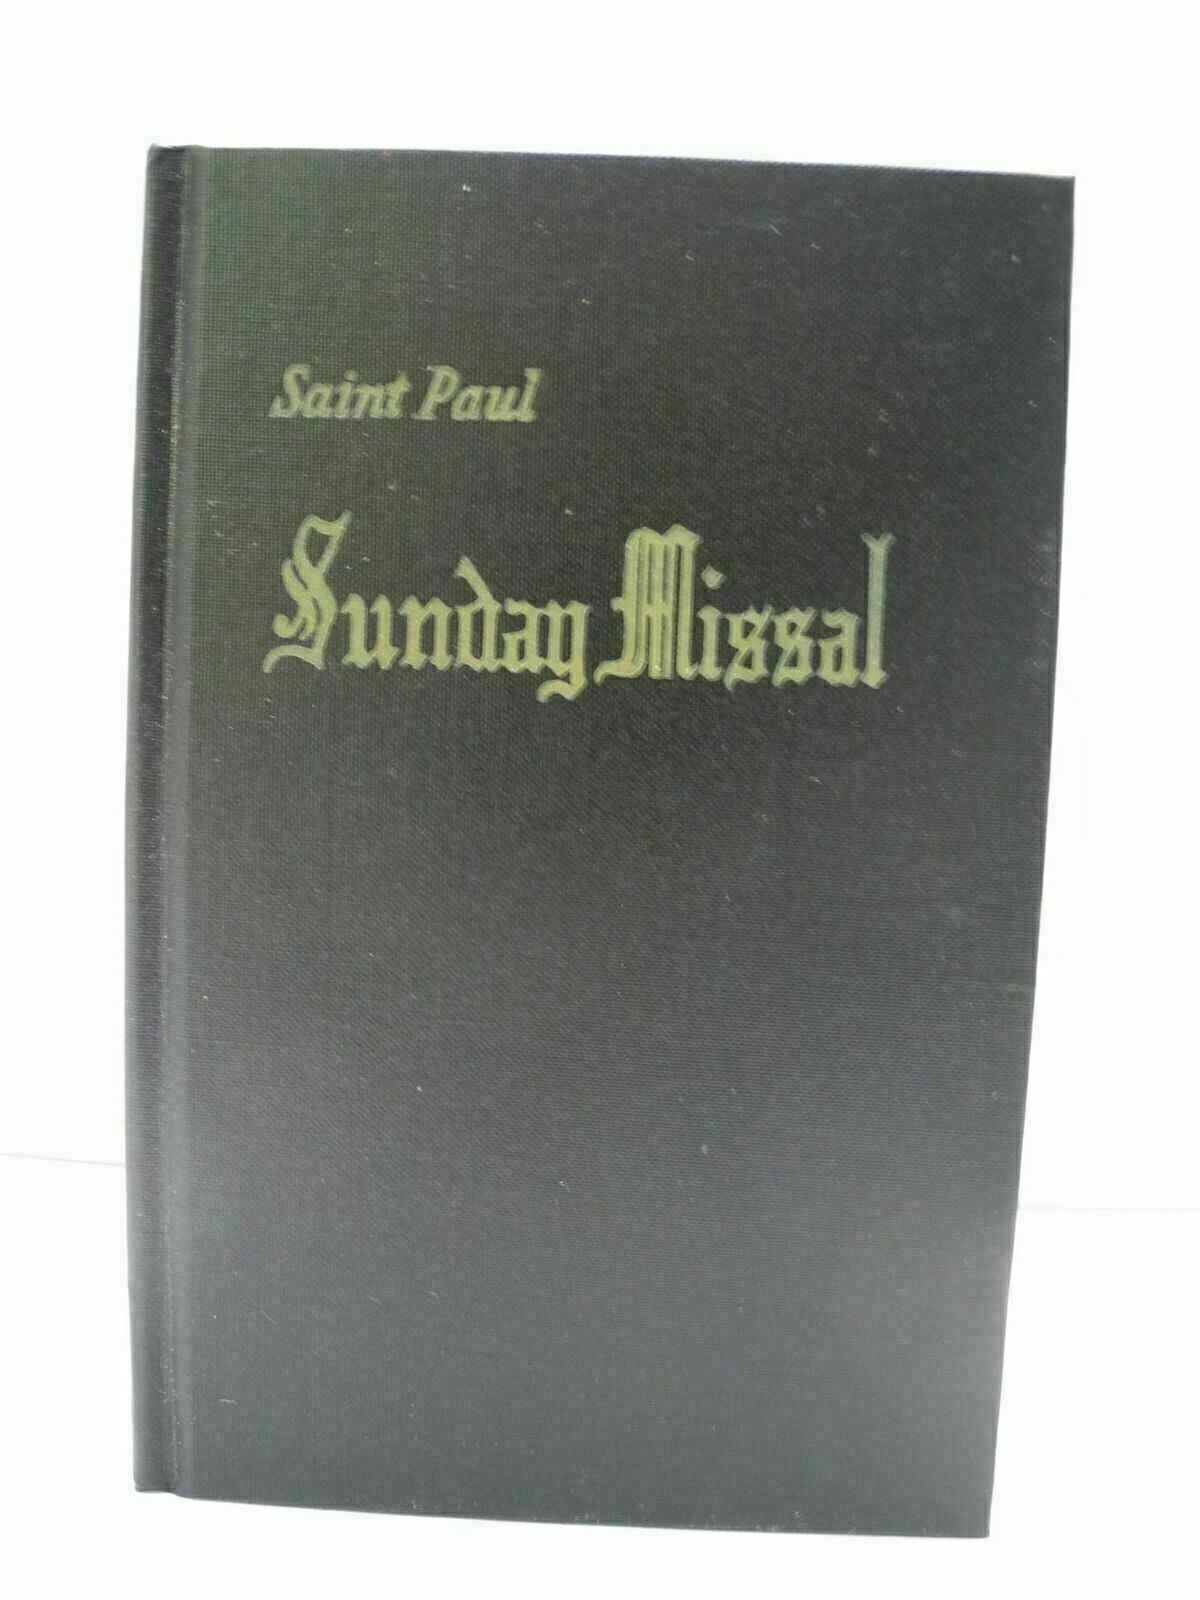 1967 The New St Paul Sunday Missal Catholic Religious Book